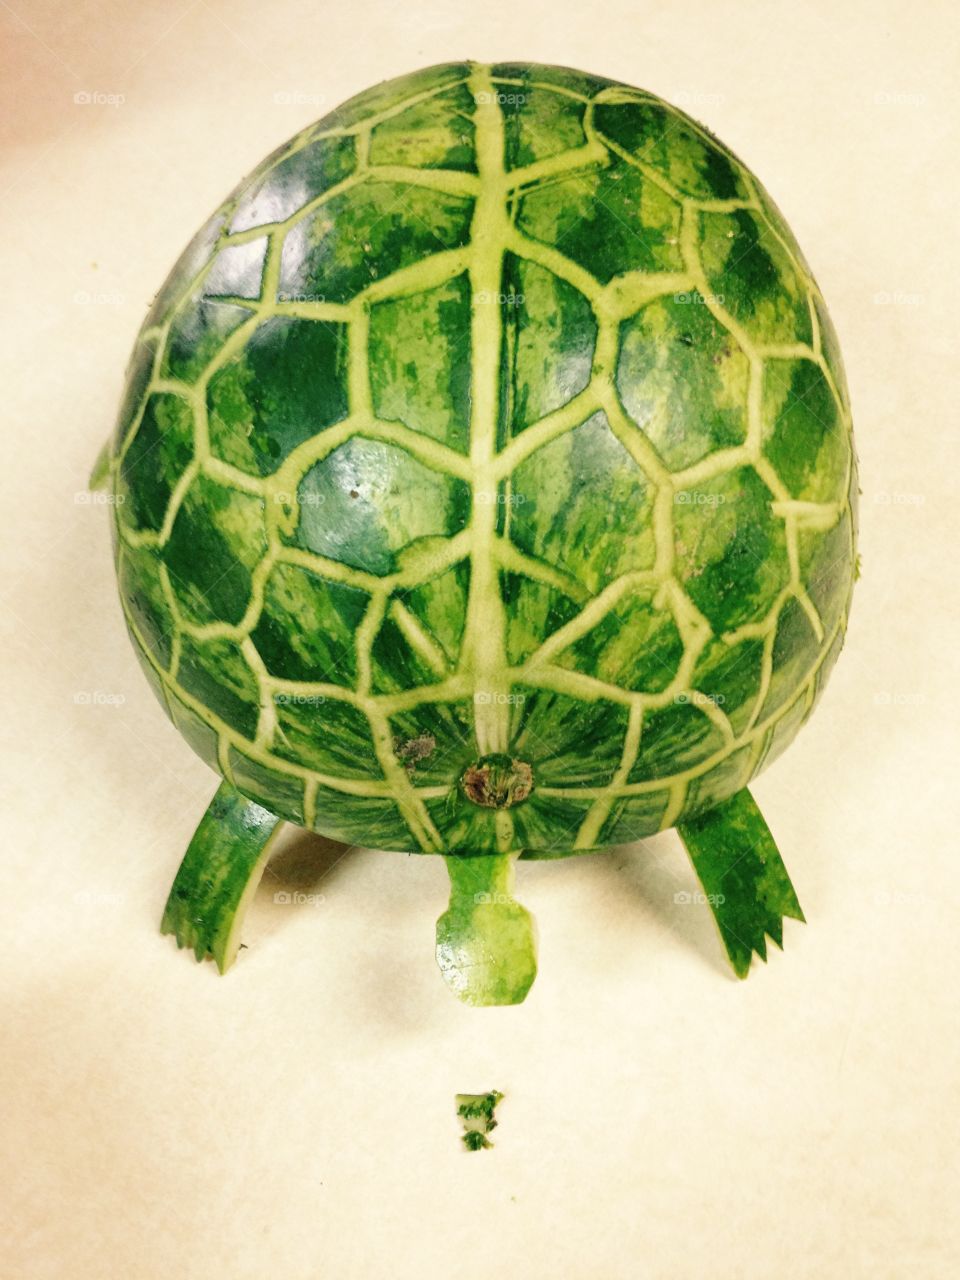 Watermelon turtle